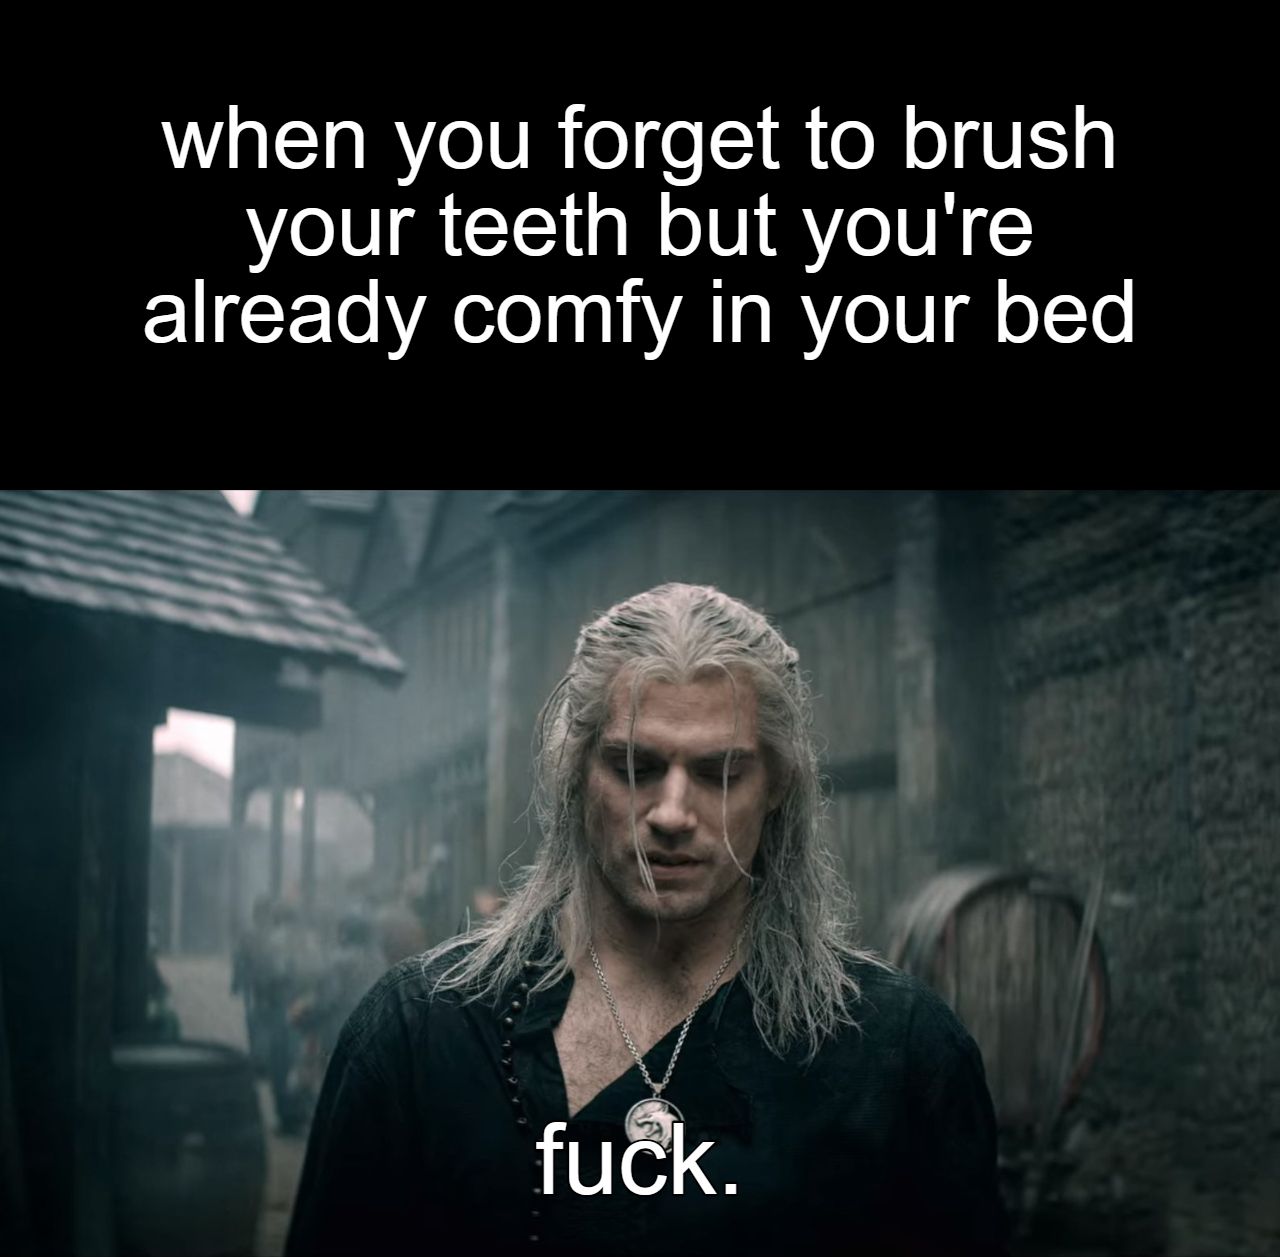 gotta brush those teeth